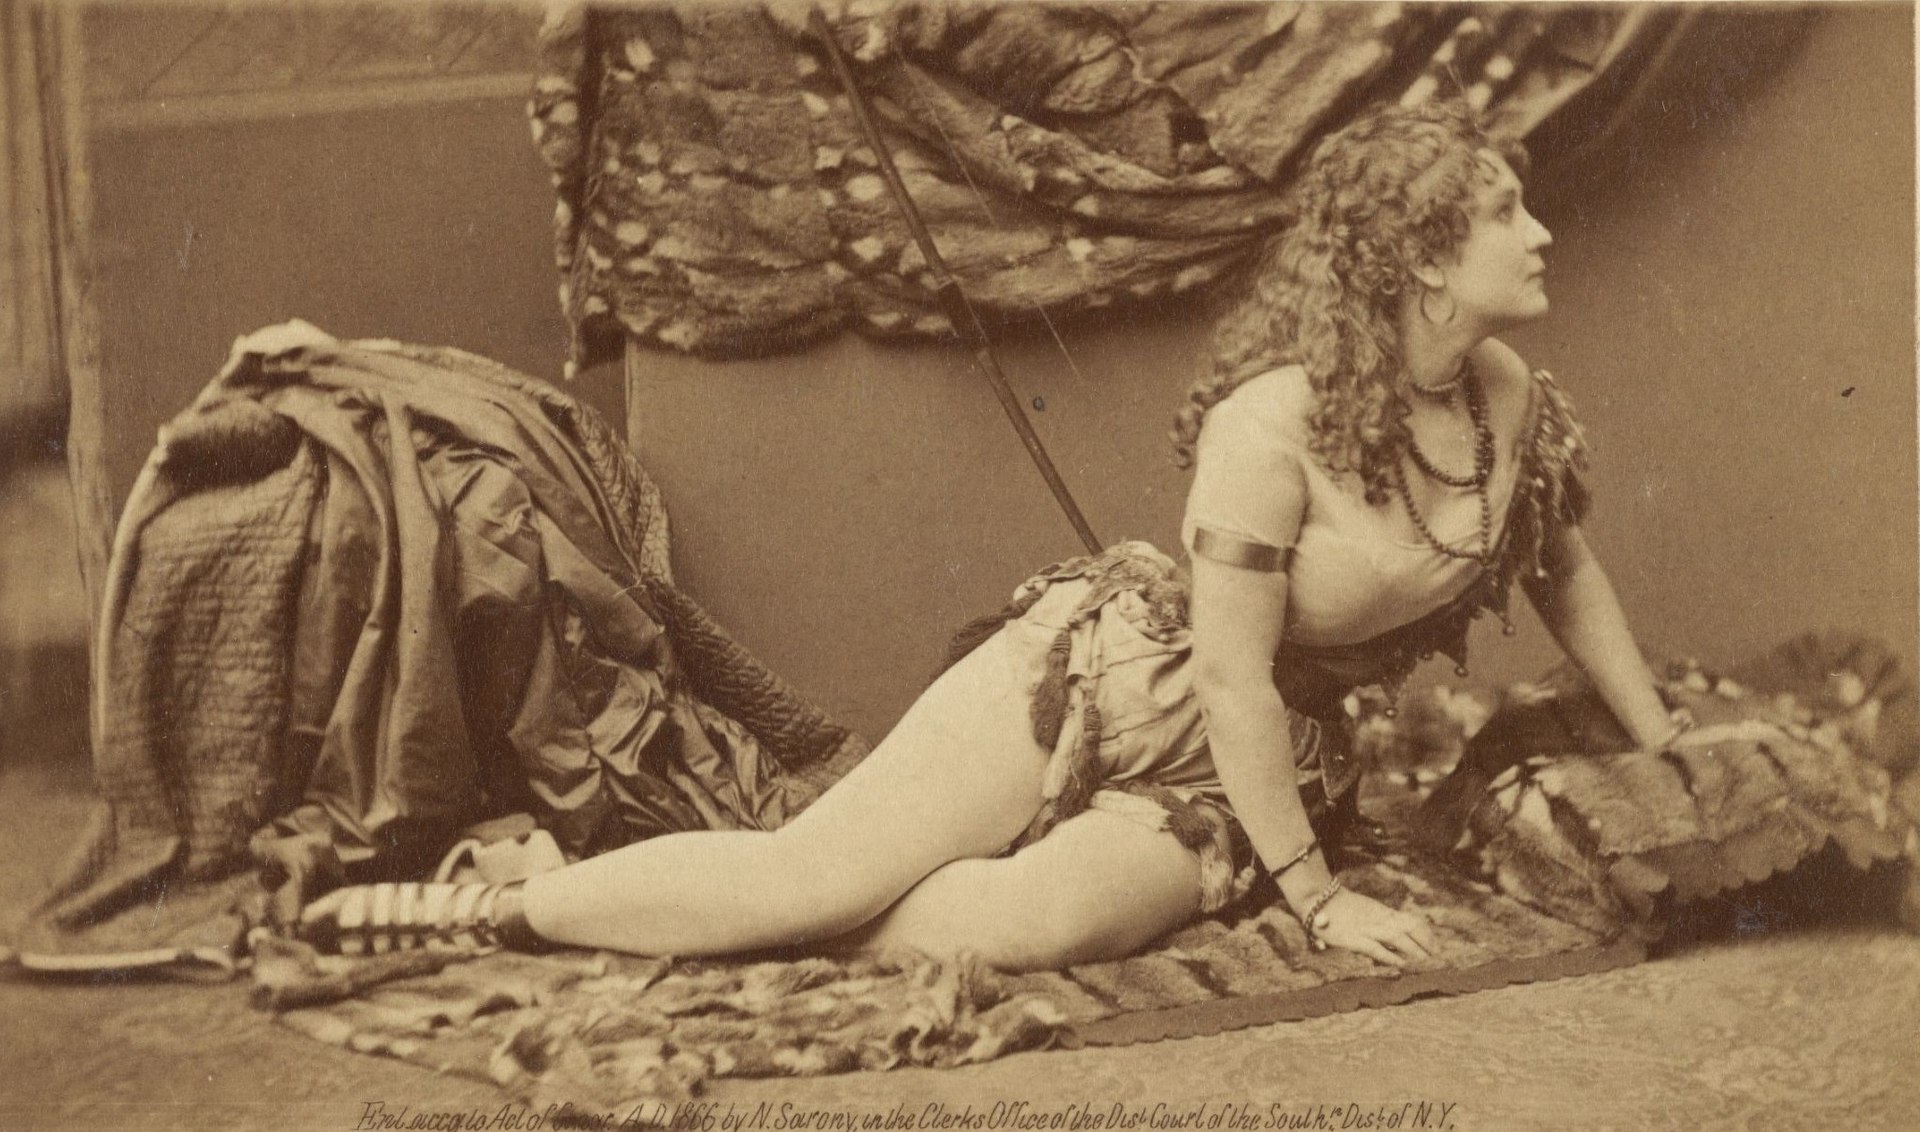 19th Century Public Sex - Public Women: Sex in 19th-century America â€” The Exploress